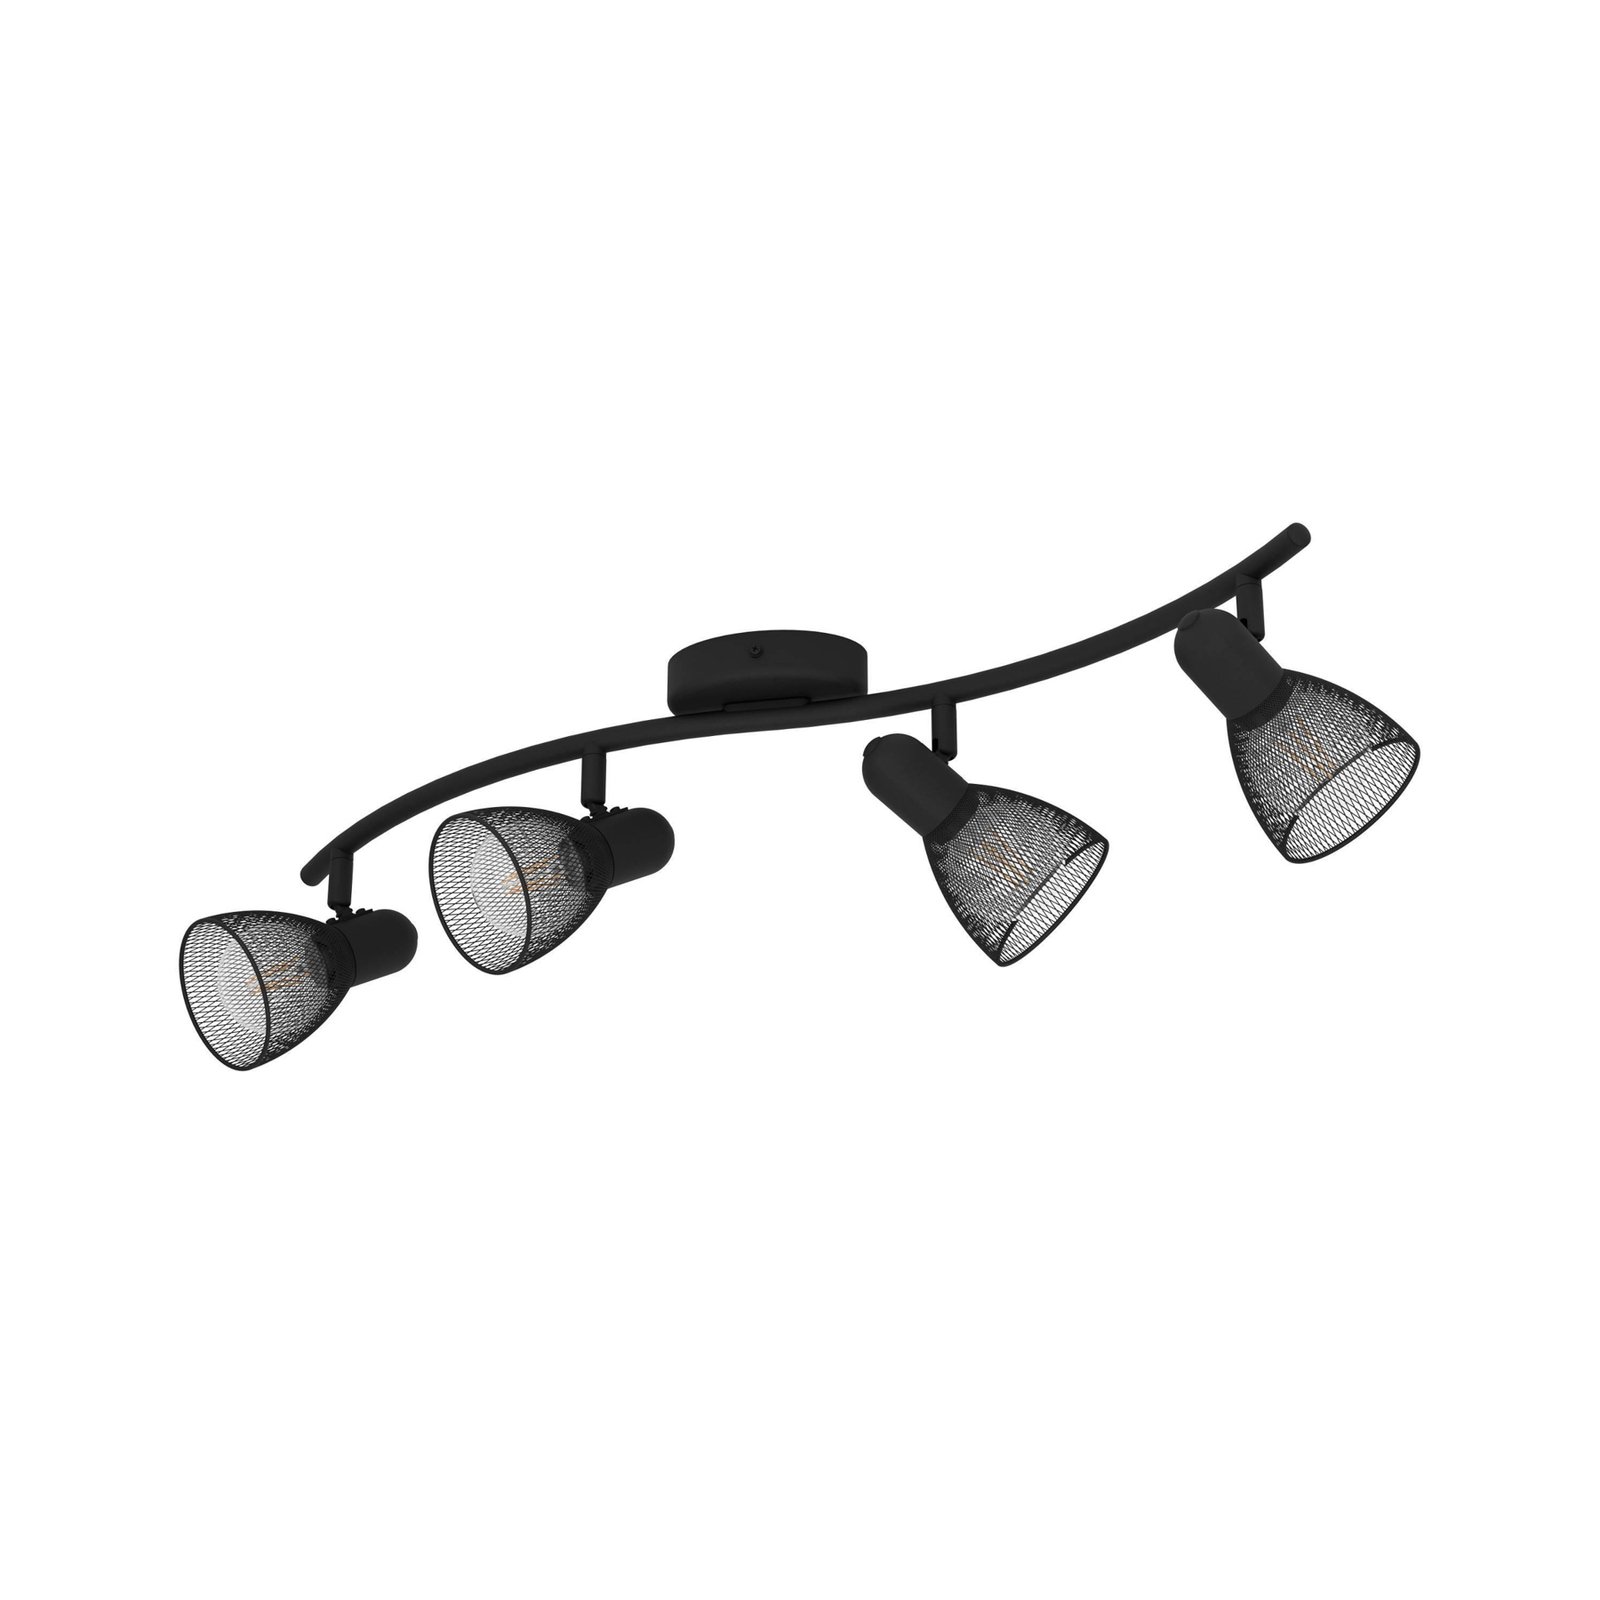 Corvigno downlight, length 64 cm, black, 4-bulb, steel